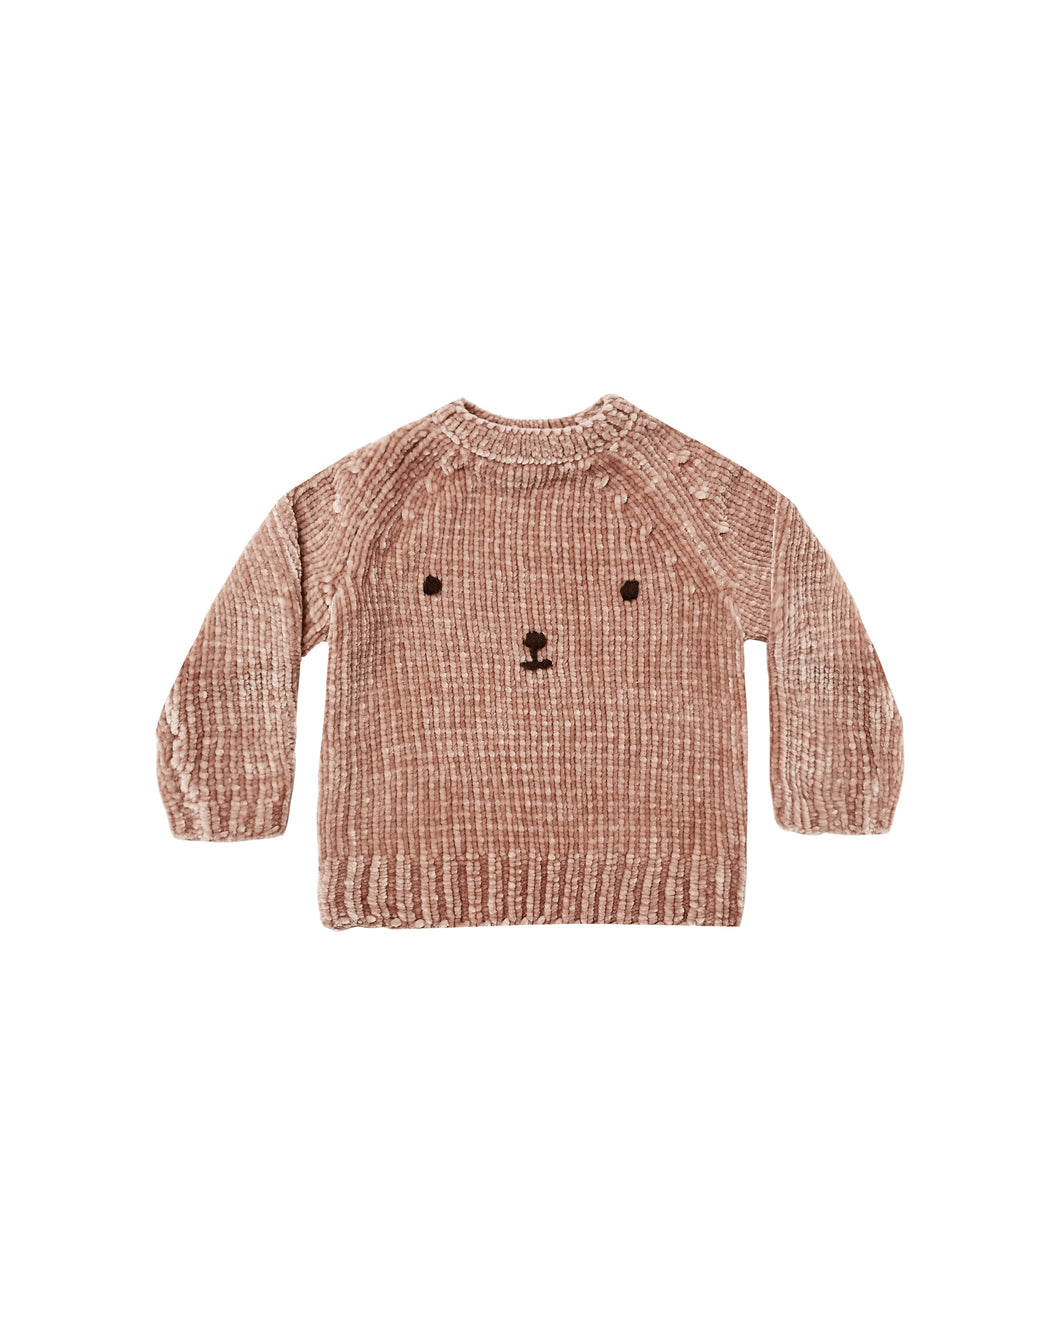 Chenille sweater - bear